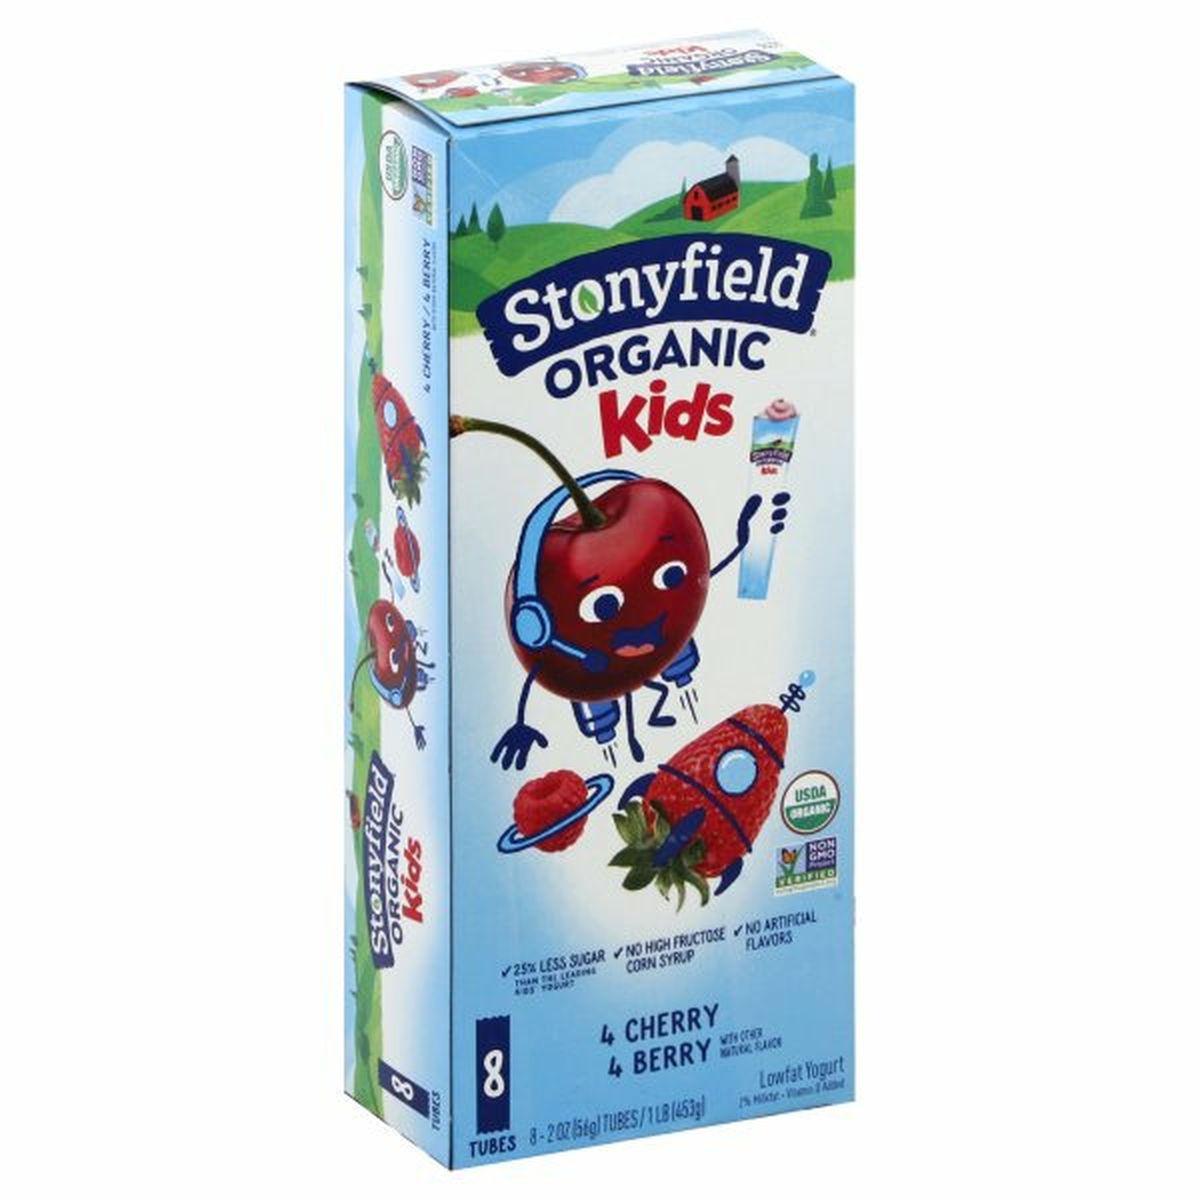 Calories in Stonyfield Organic Kids Yogurt, Lowfat, Cherry, Berry